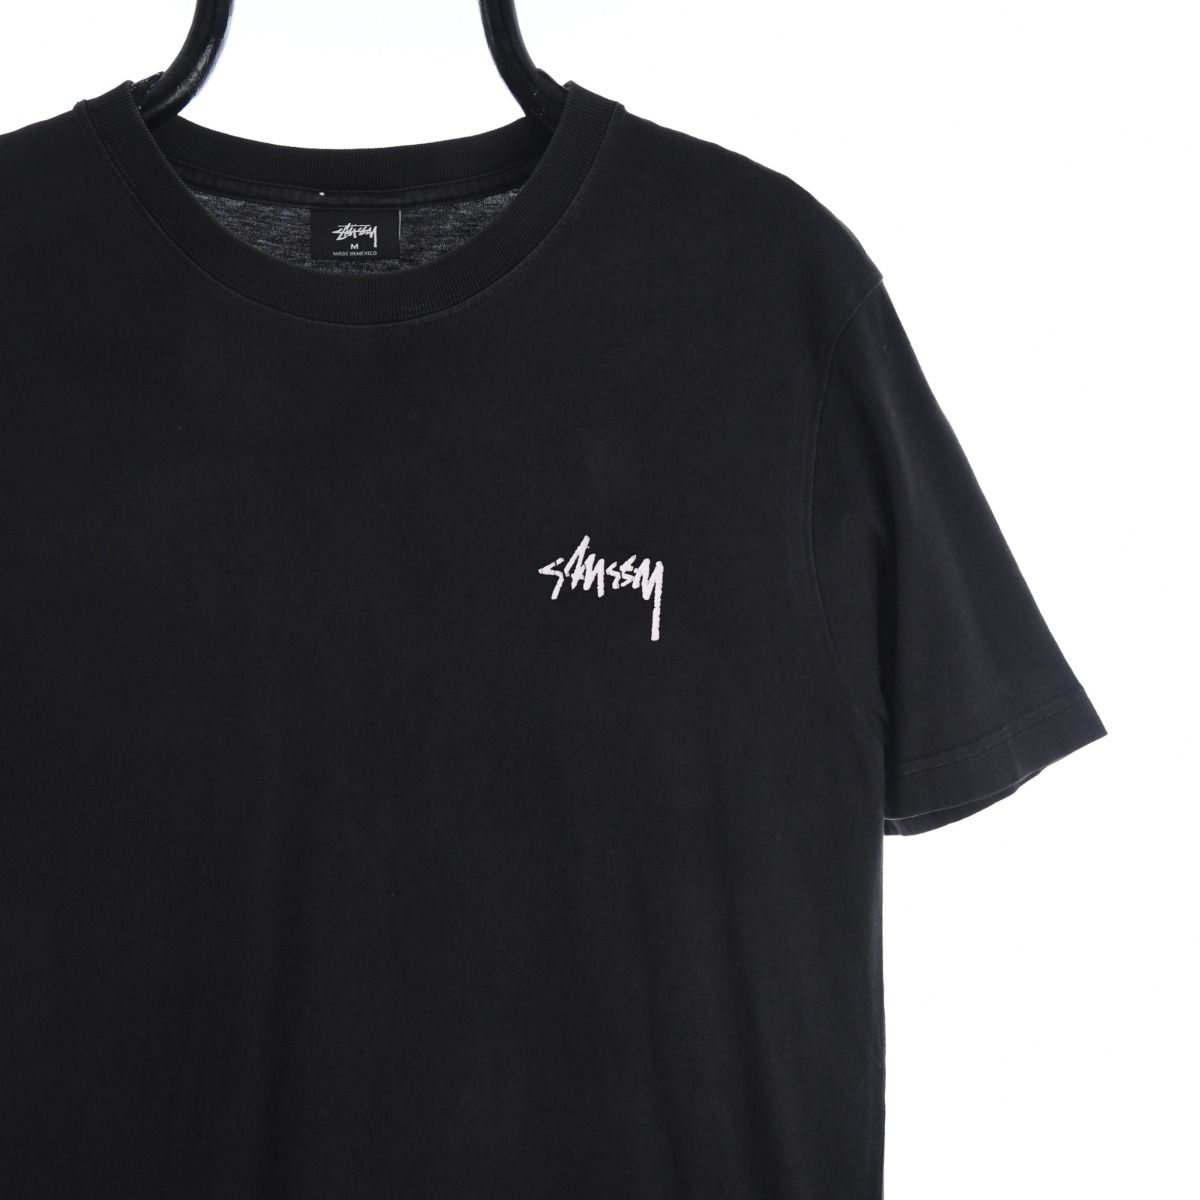 Stussy Black T-Shirt